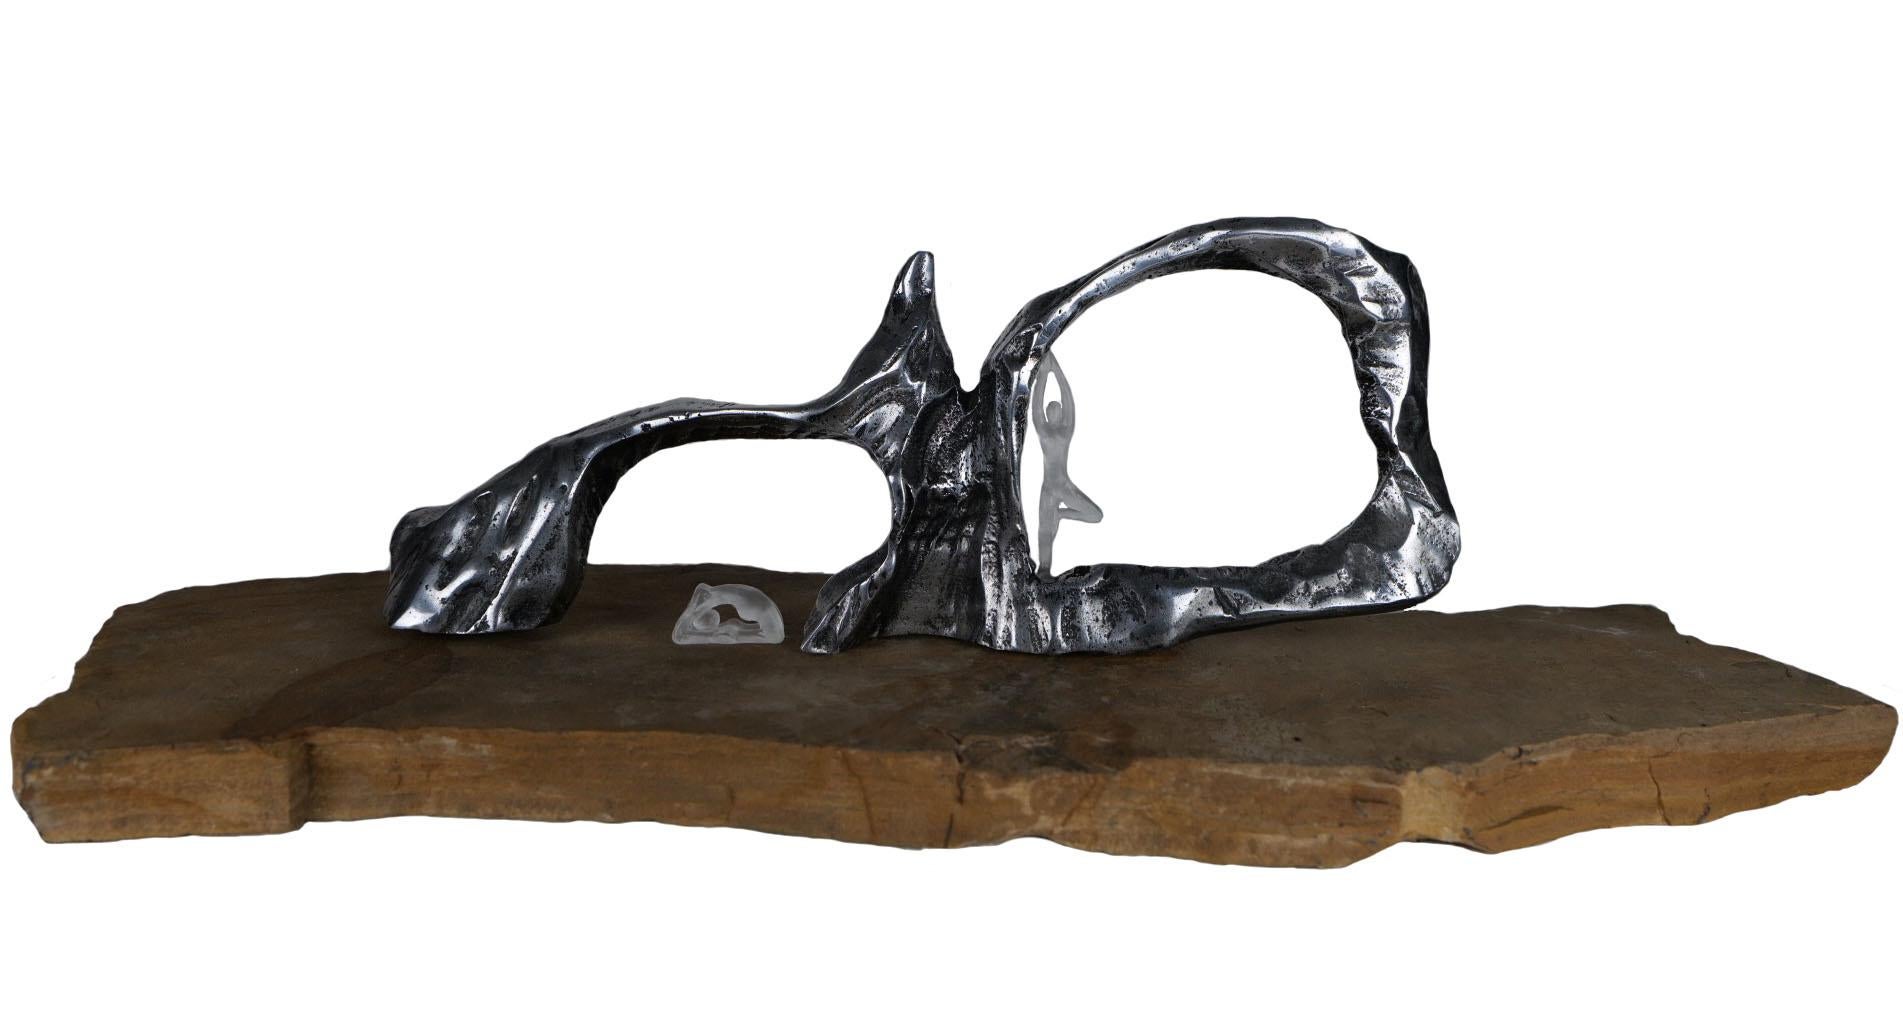 David Marshall Figurative Sculpture - "Balanced" Created by Jenn Baker, D Marshall, Cast Glass and Aluminum